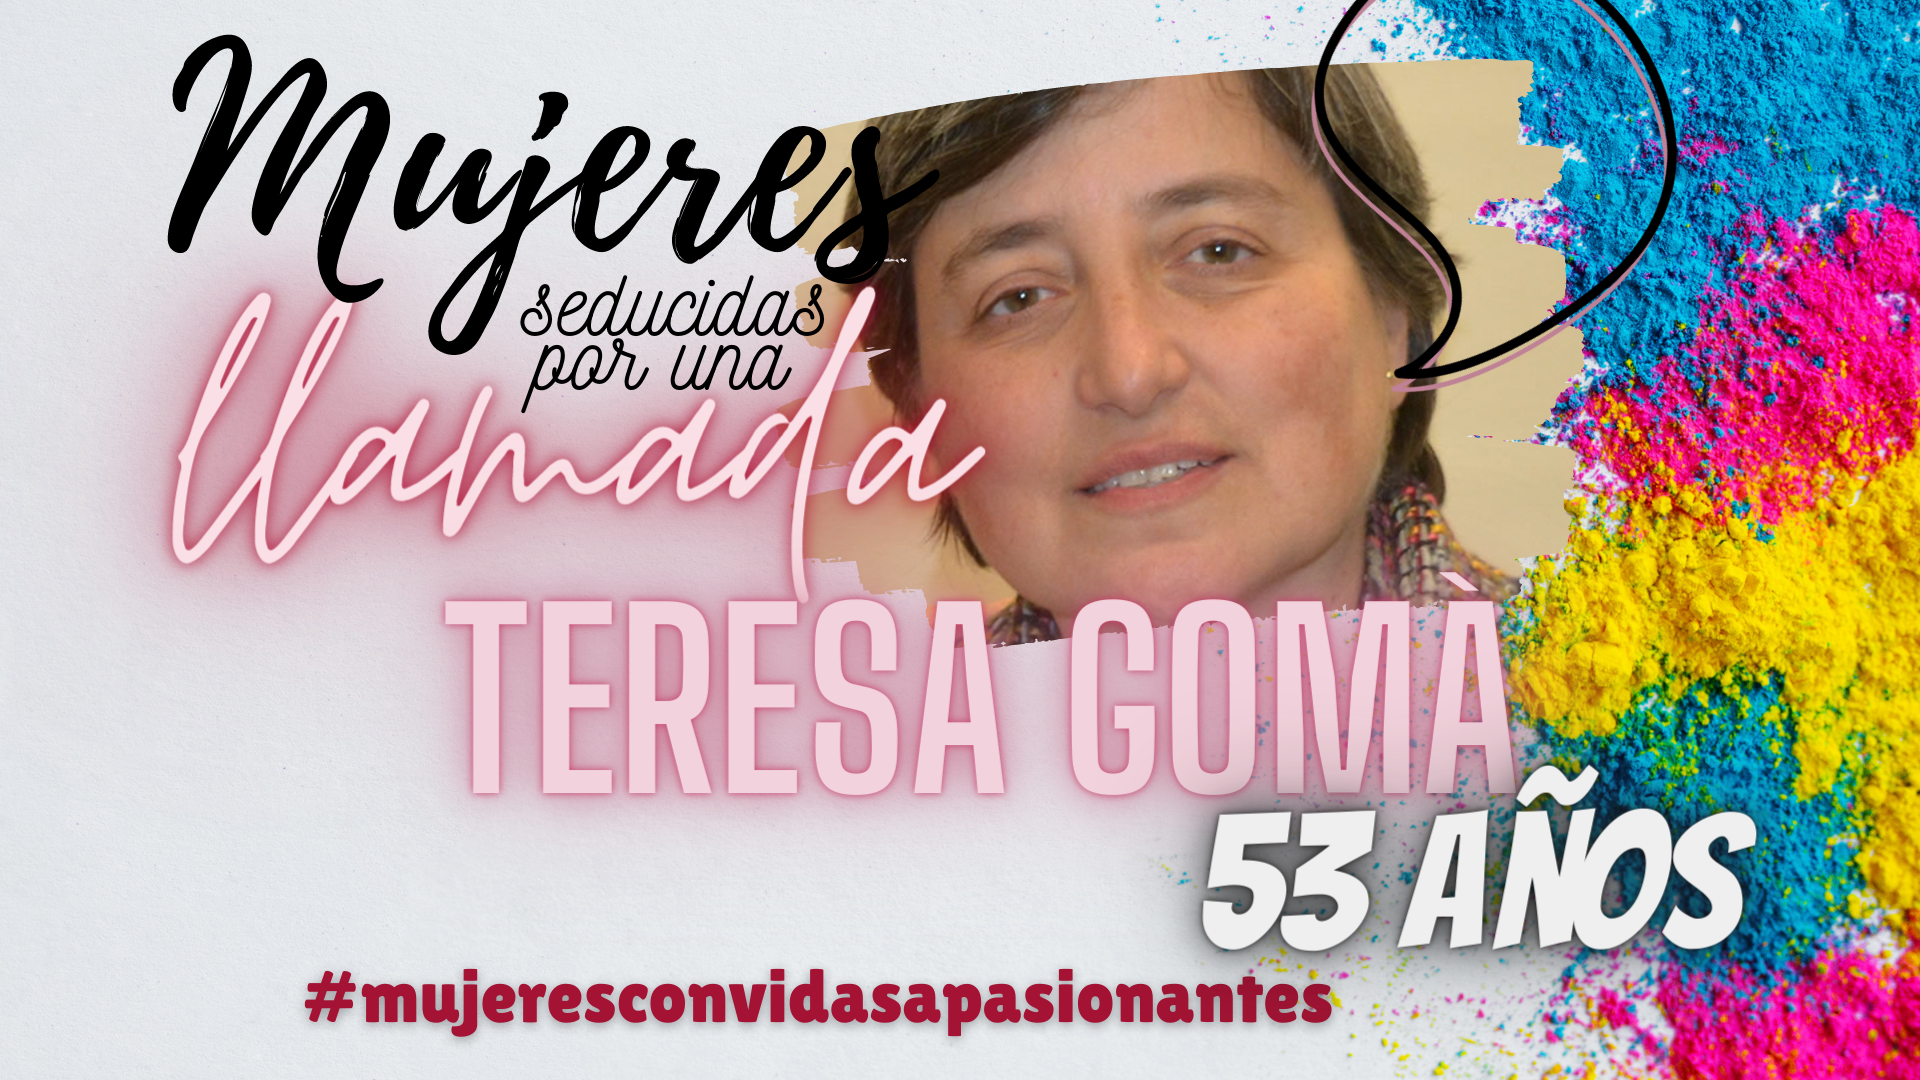 Mujeres con vidas apasionantes Teresa Gomà